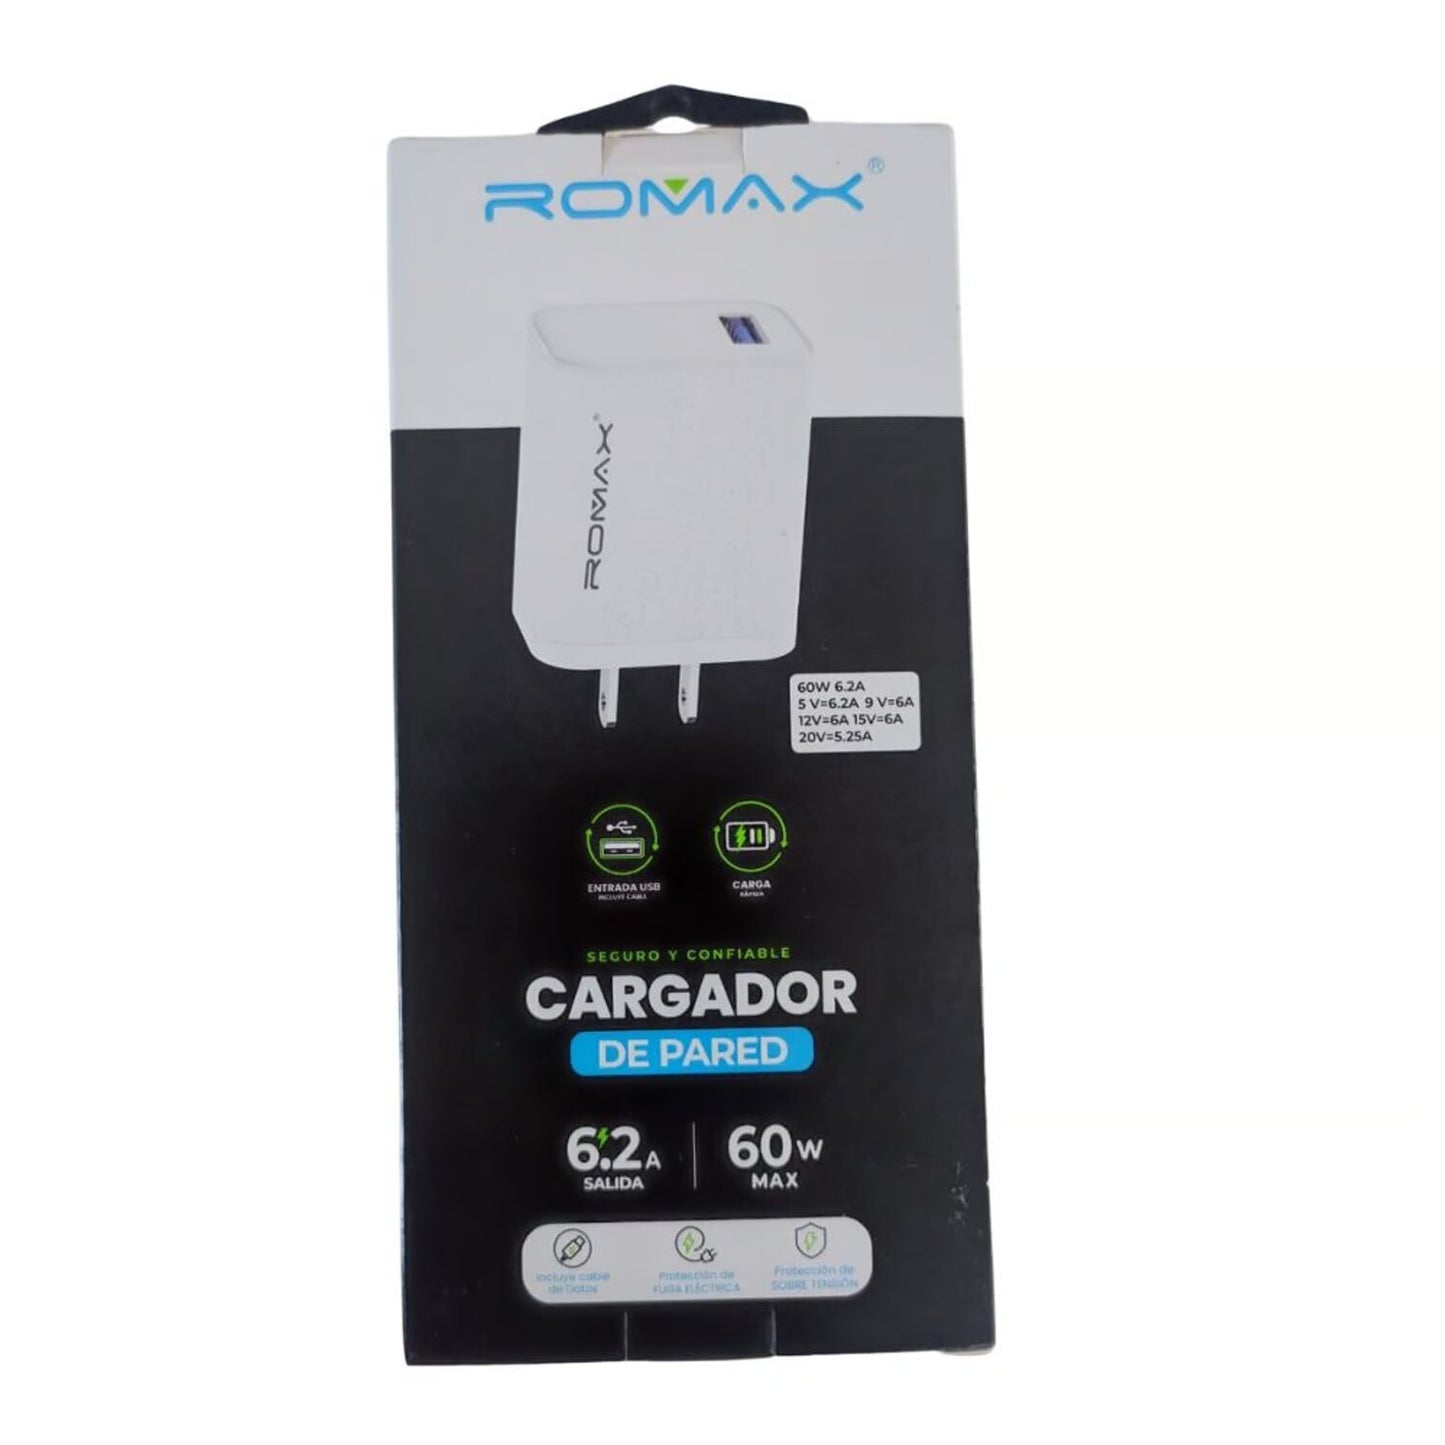 Cargador 60W incluye cable Micro USB Tipo V8